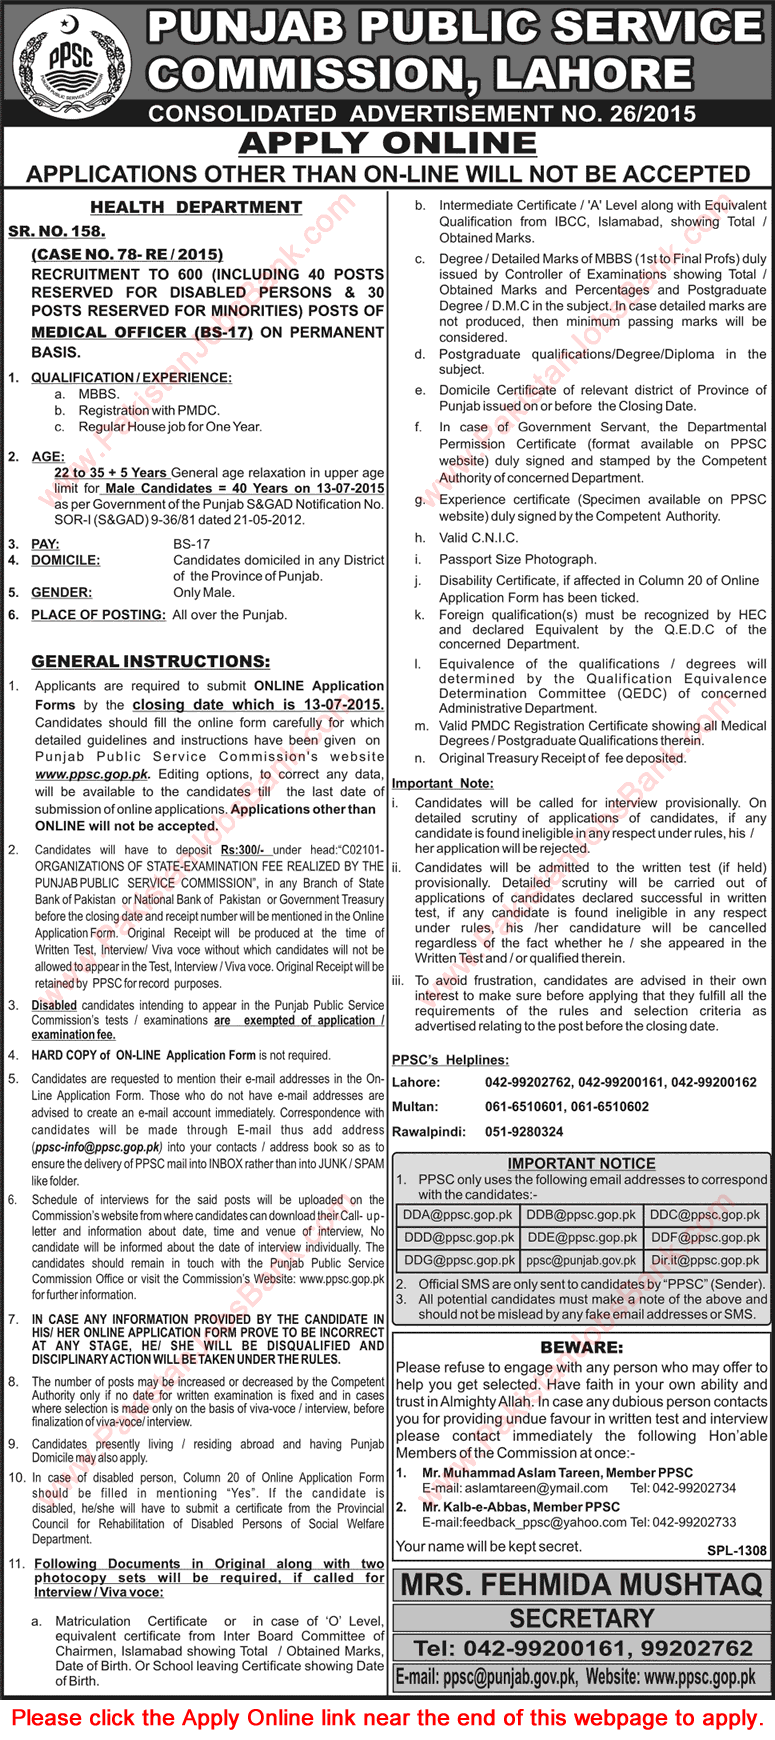 PPSC Medical Officer Jobs in Health Department Punjab 2015 June / July Apply Online Latest